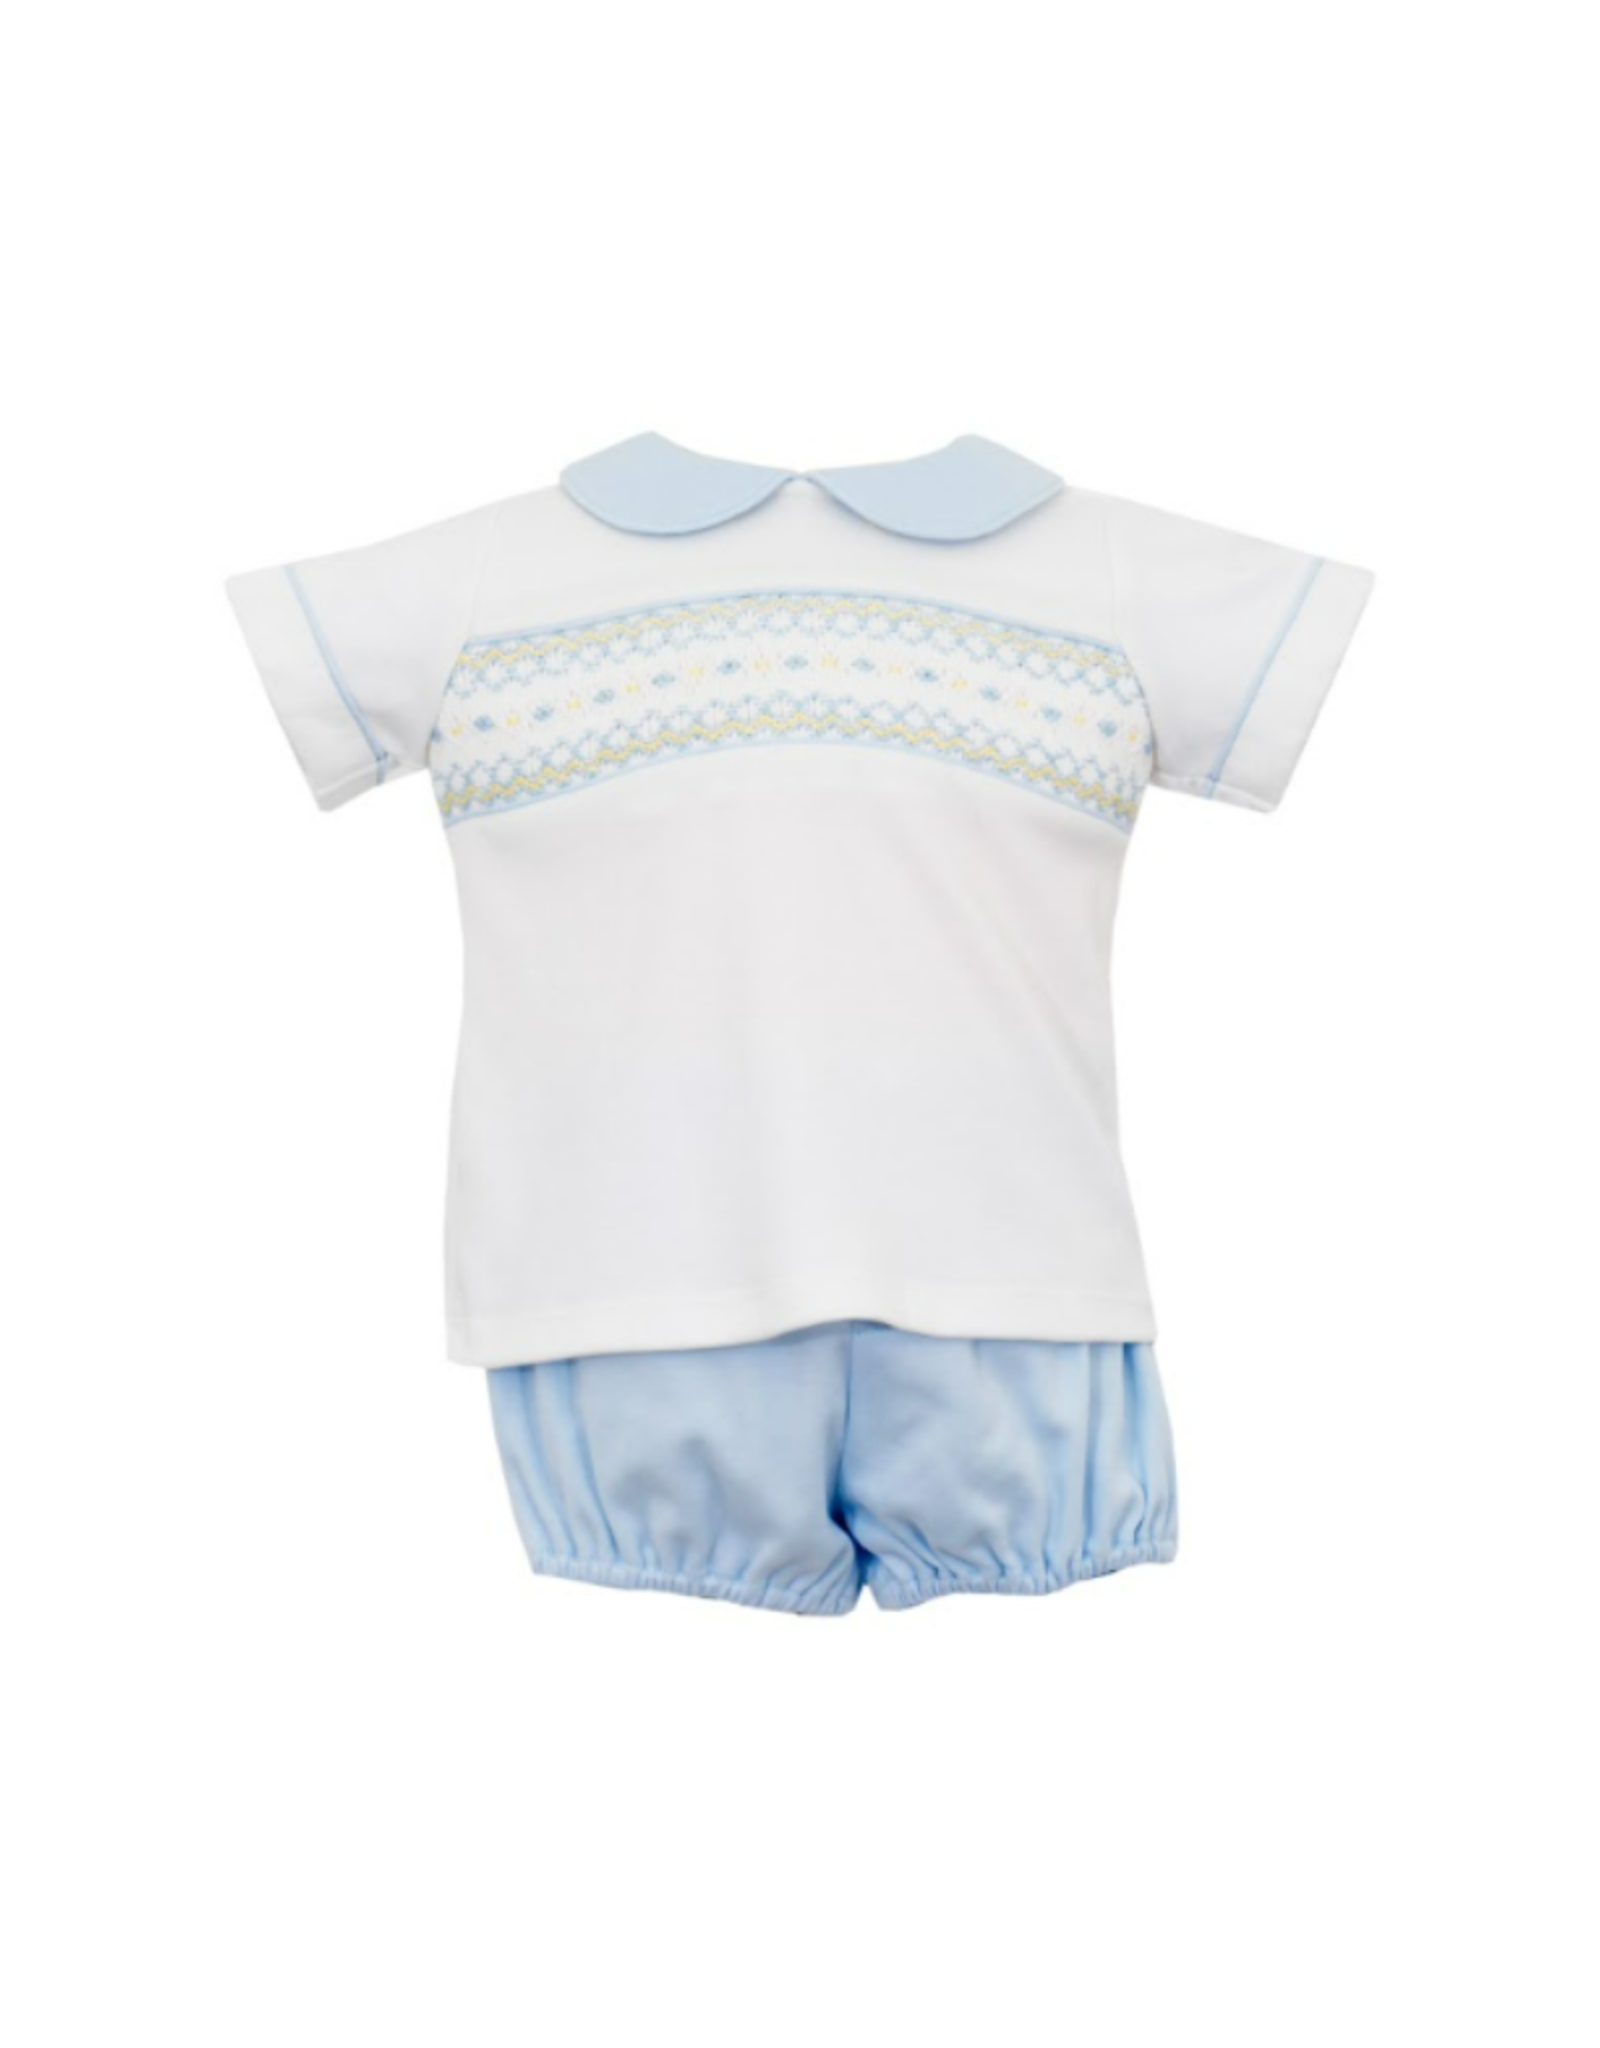 Petit Bebe White and Blue Knit Kevin Smock Diaper Set